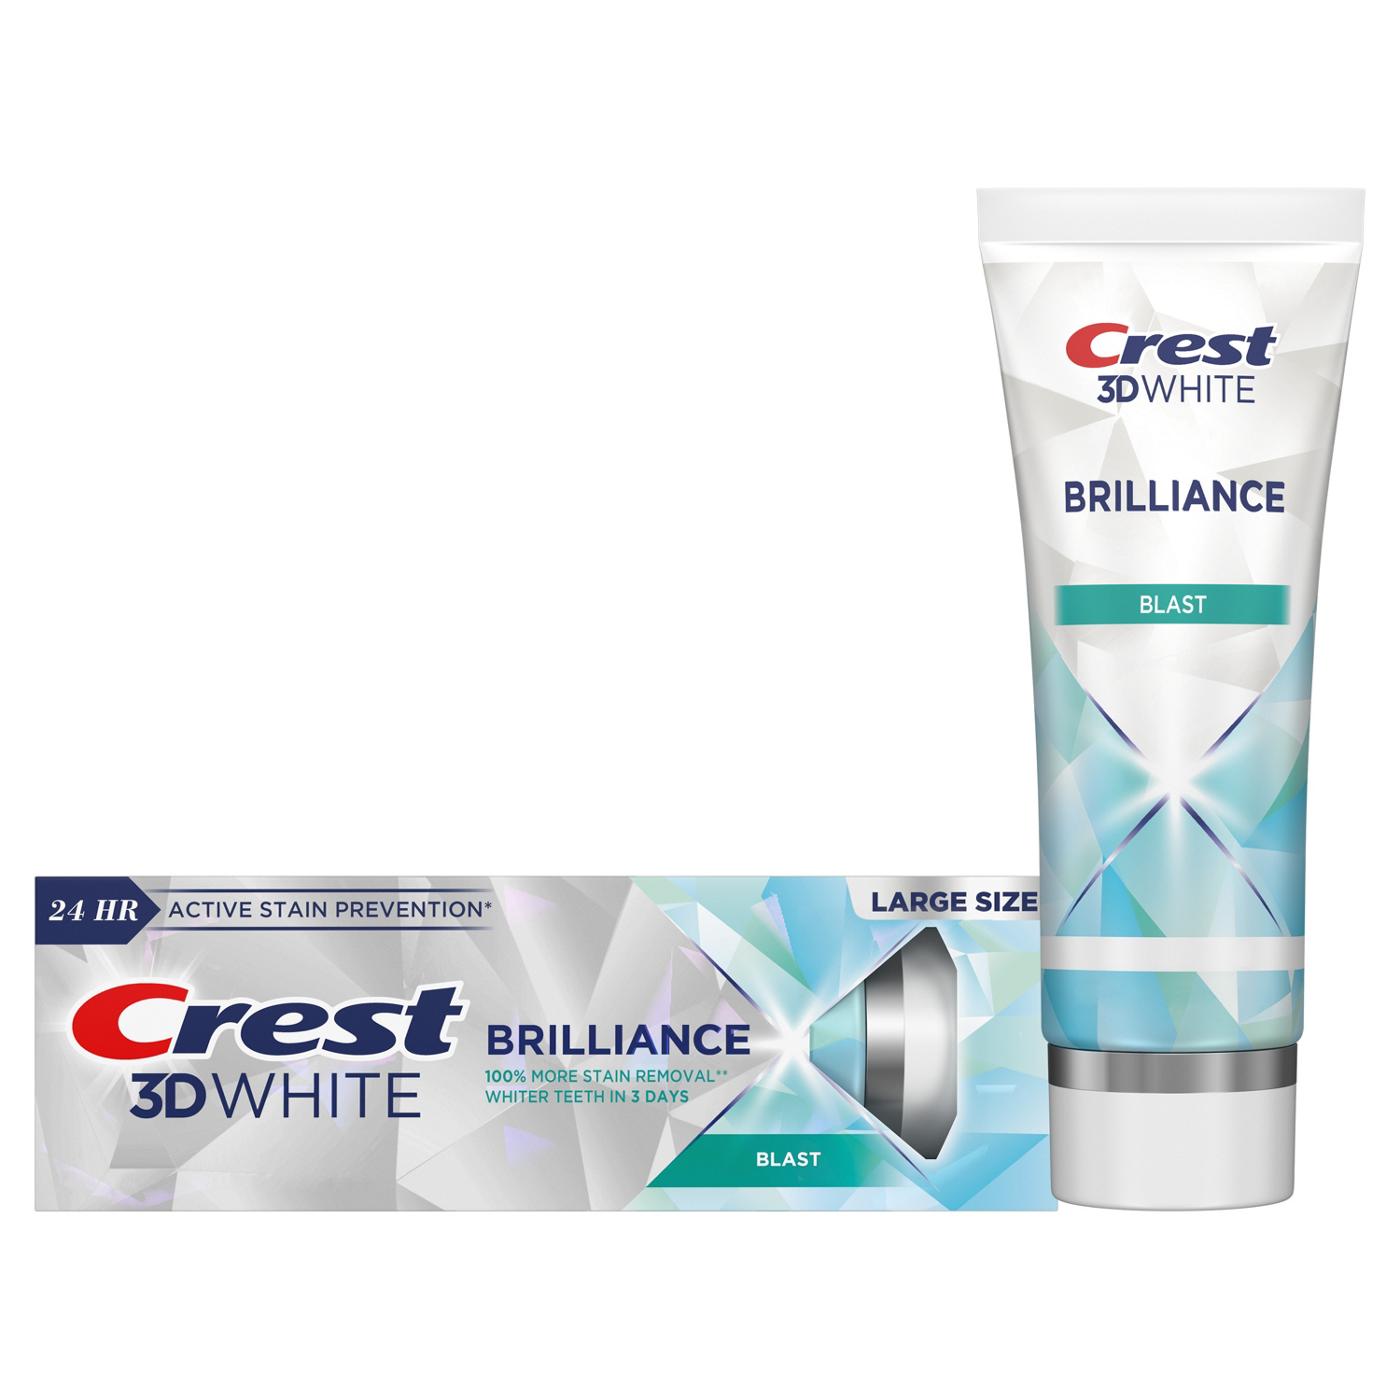 Crest 3D White Brilliance Toothpaste - Blast; image 5 of 6